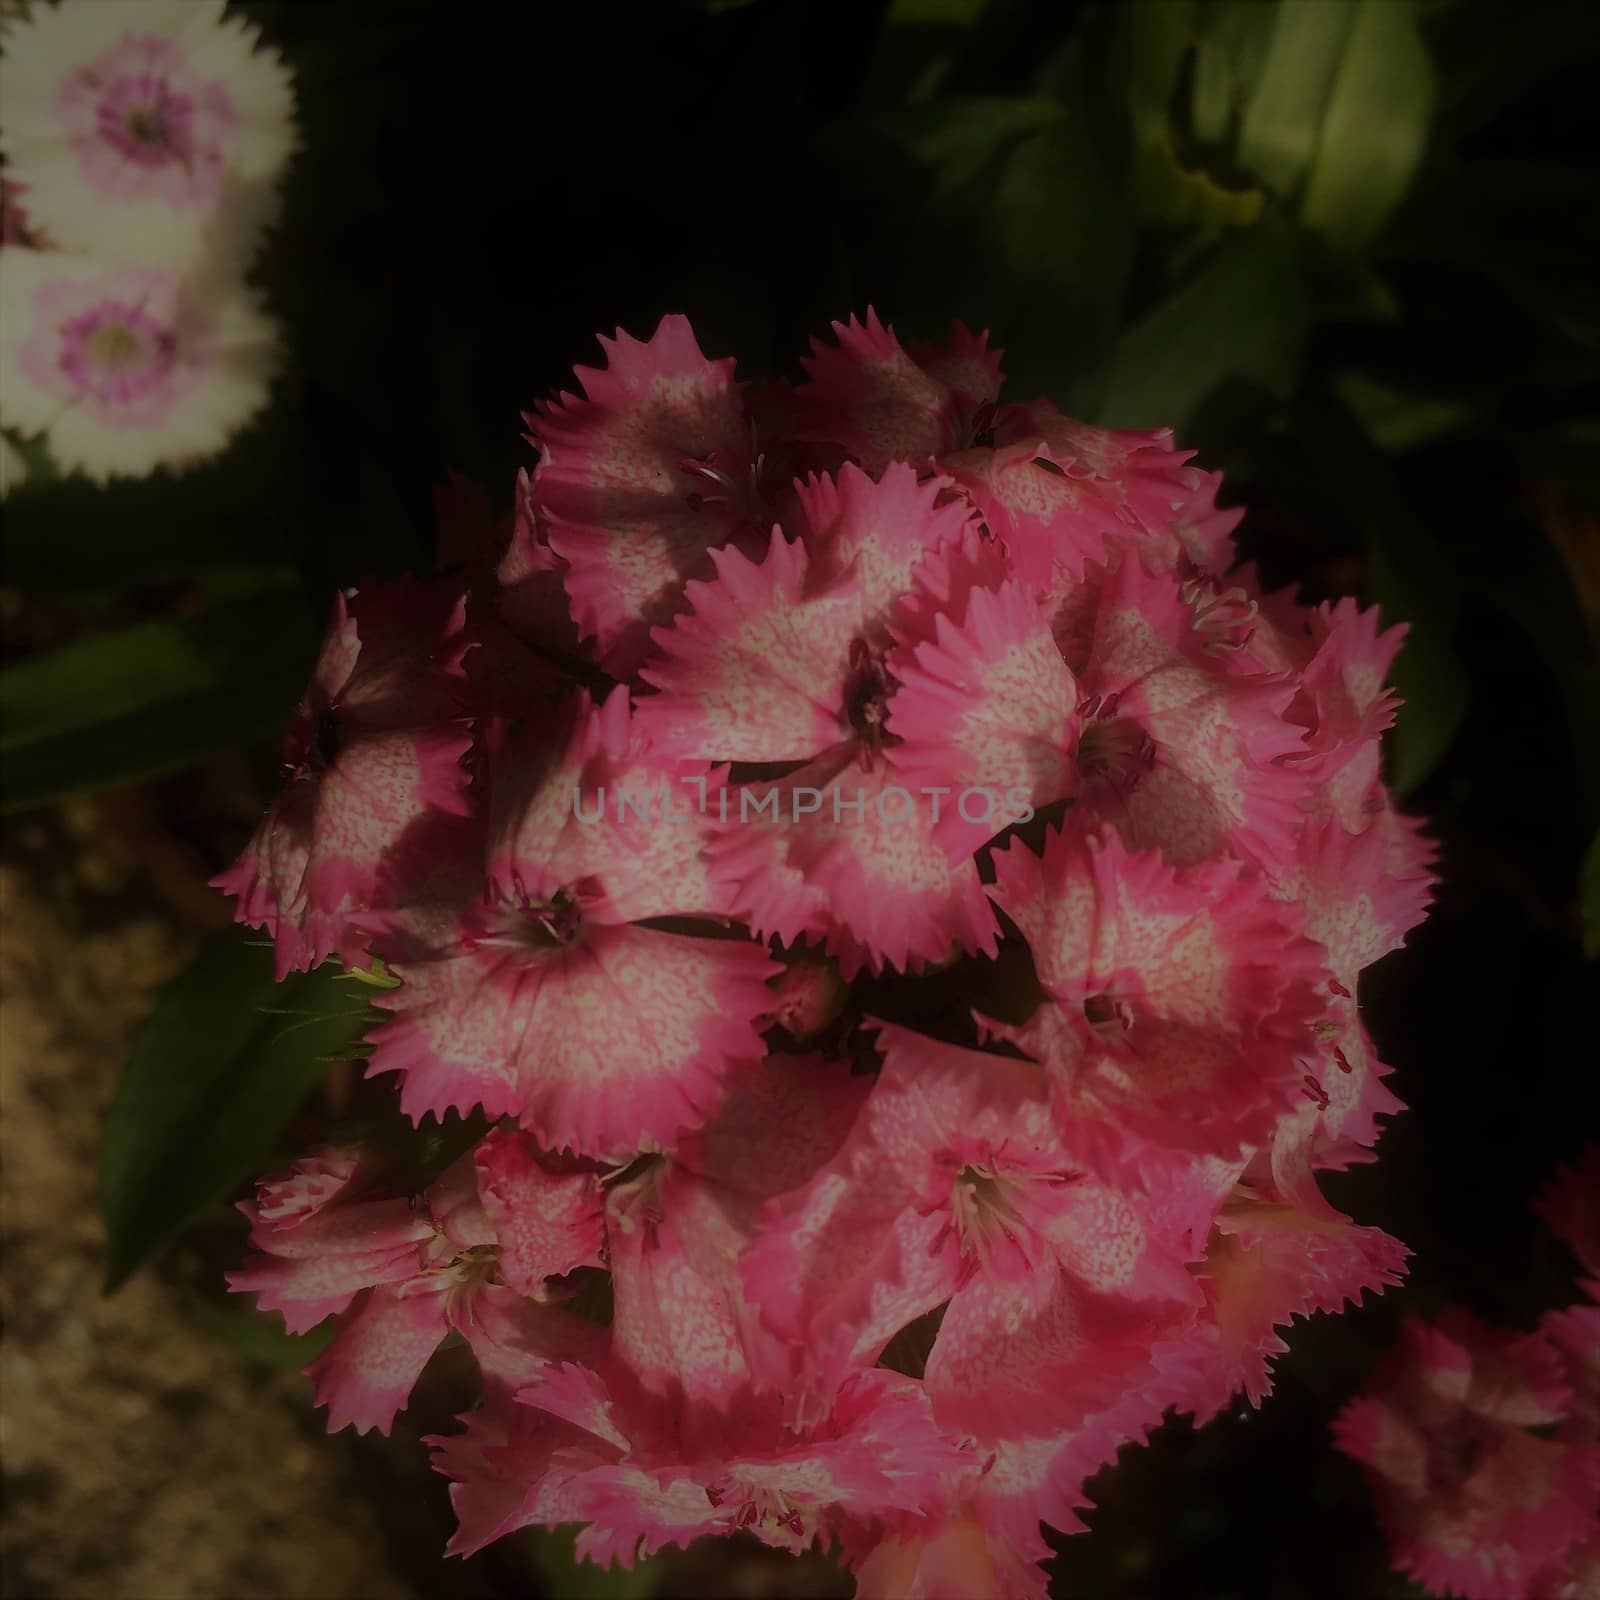 pink sweet williams flowers by sarahdavies576@gmail.com